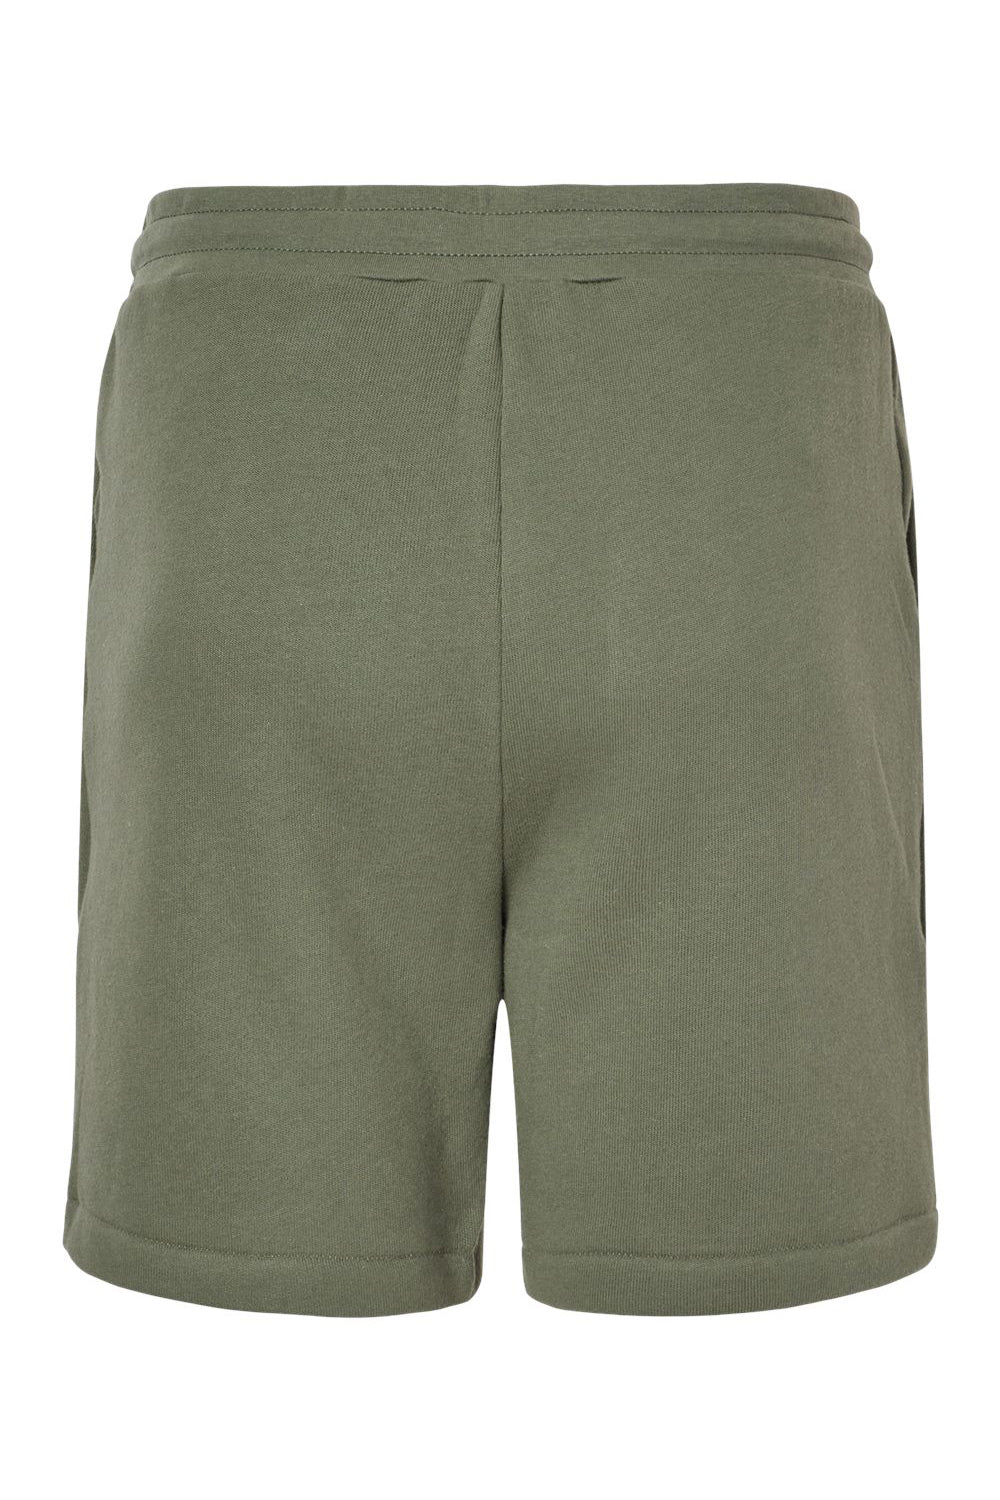 Bella + Canvas 3724 Mens Shorts w/ Pockets Military Green Flat Back